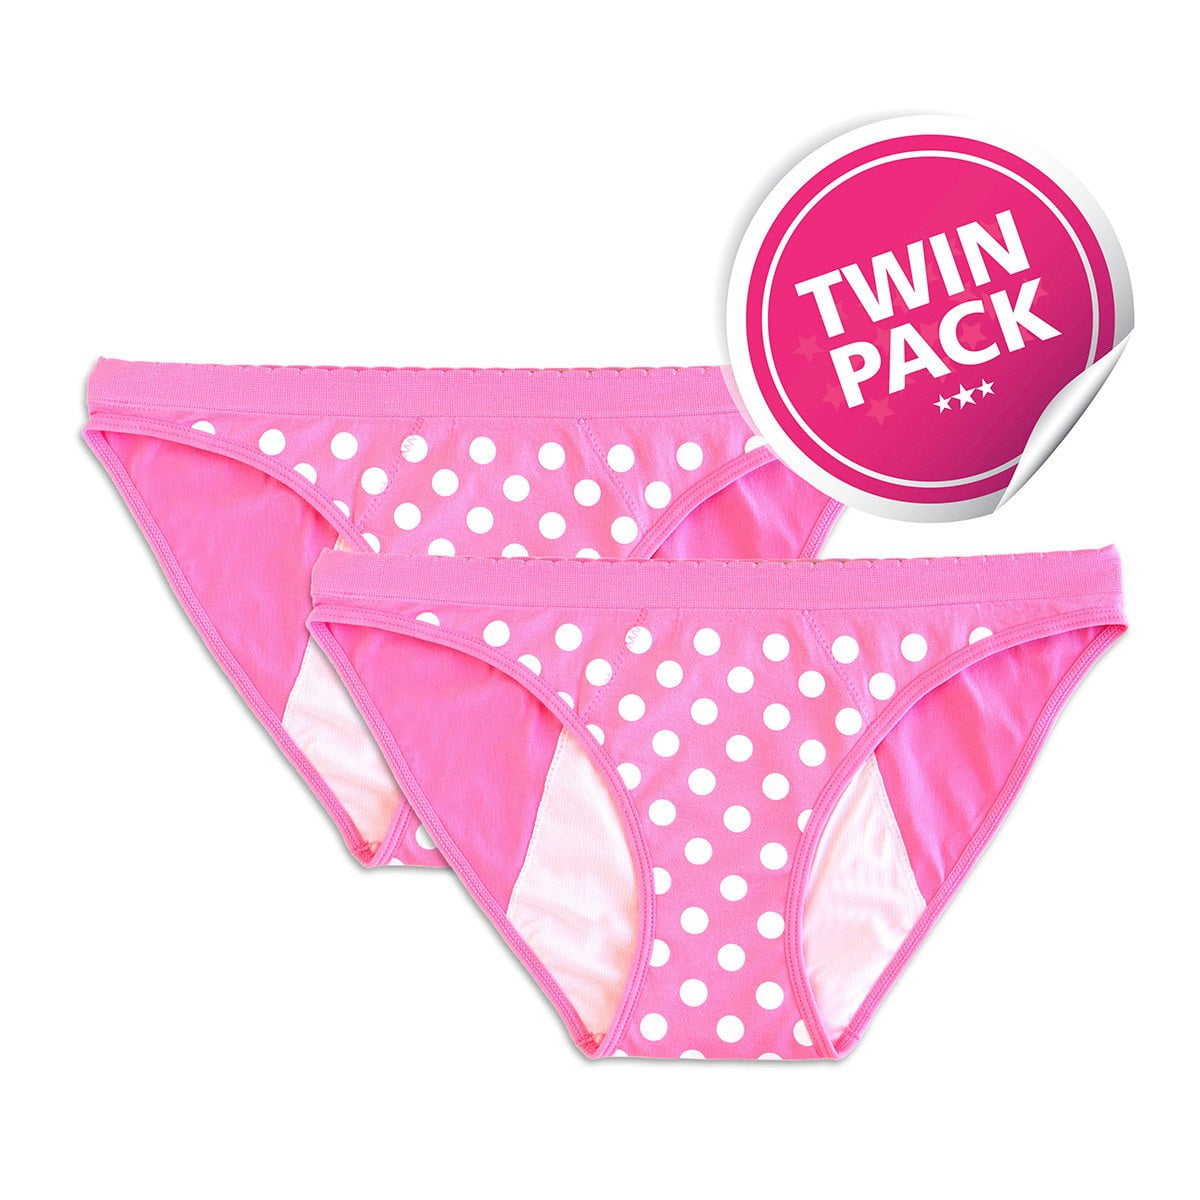 StainFree Reusable Period Panty - 2 Pack Pink Polka Dot Bikini (L